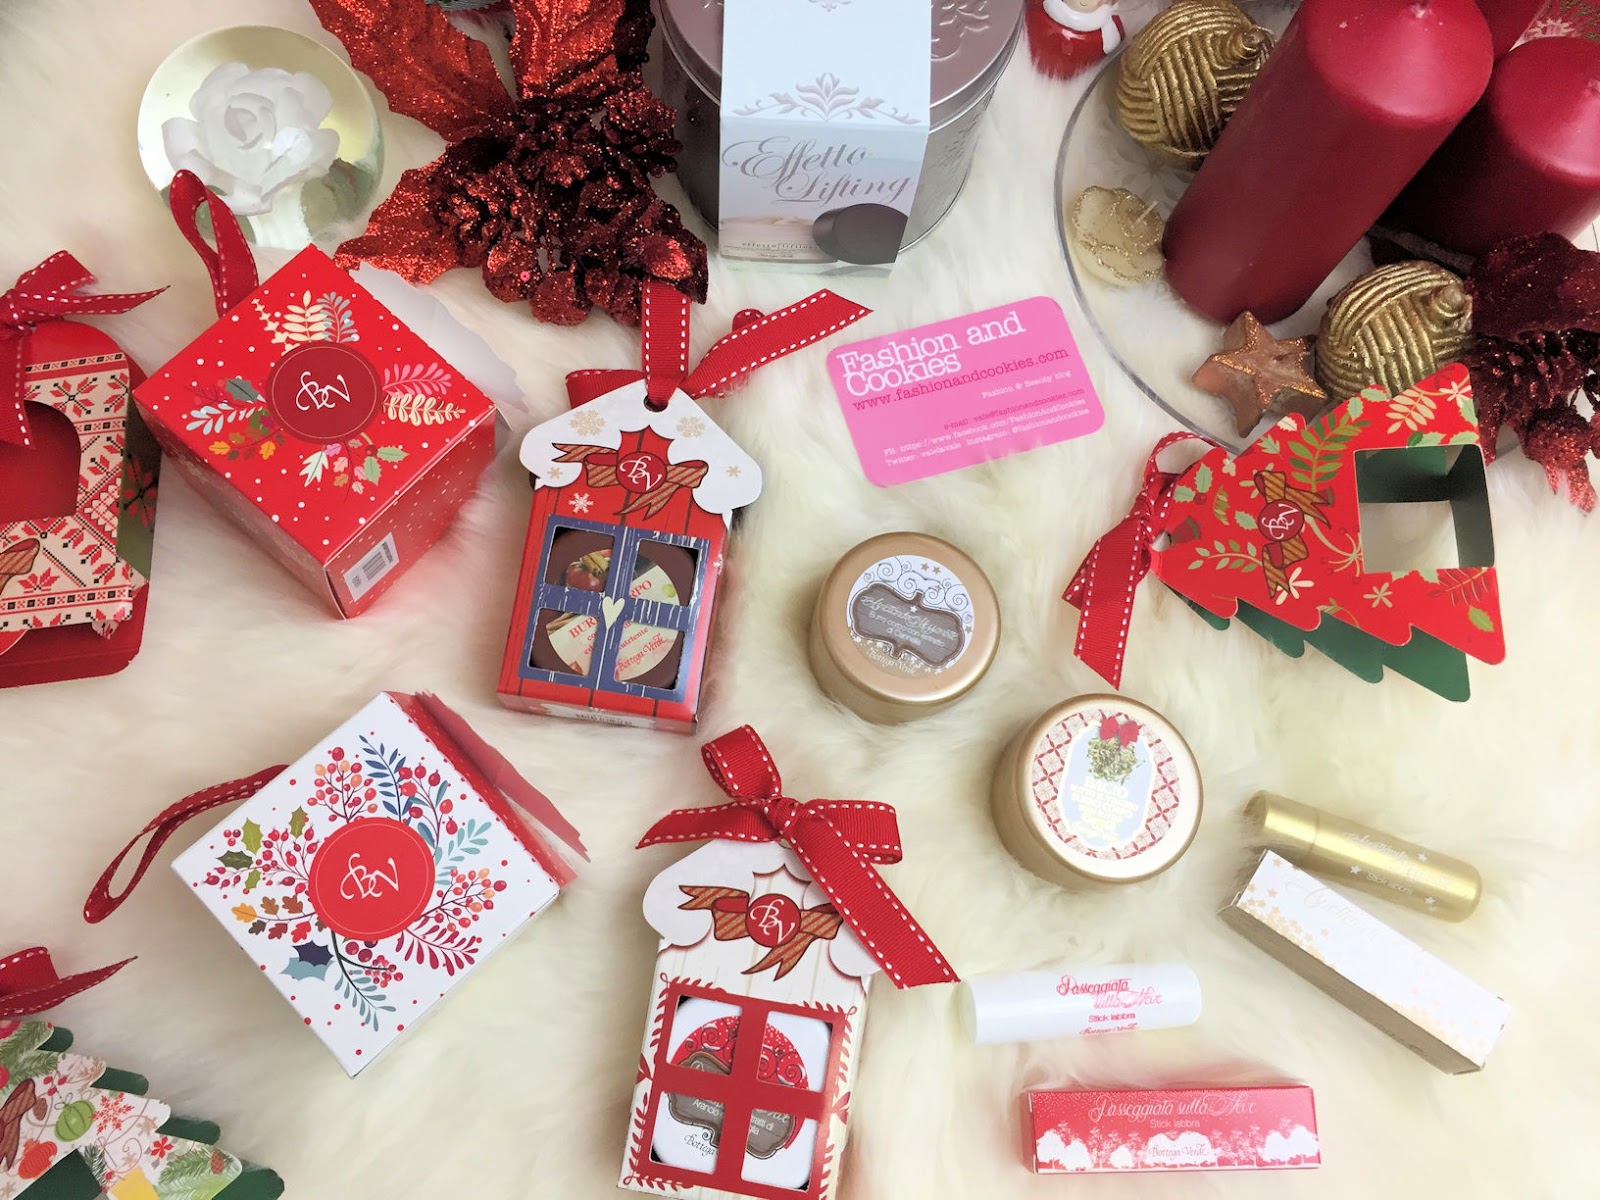 Aspettando Natale: idee regalo Bottega Verde su Fashion and Cookies beauty blog, beauty blogger